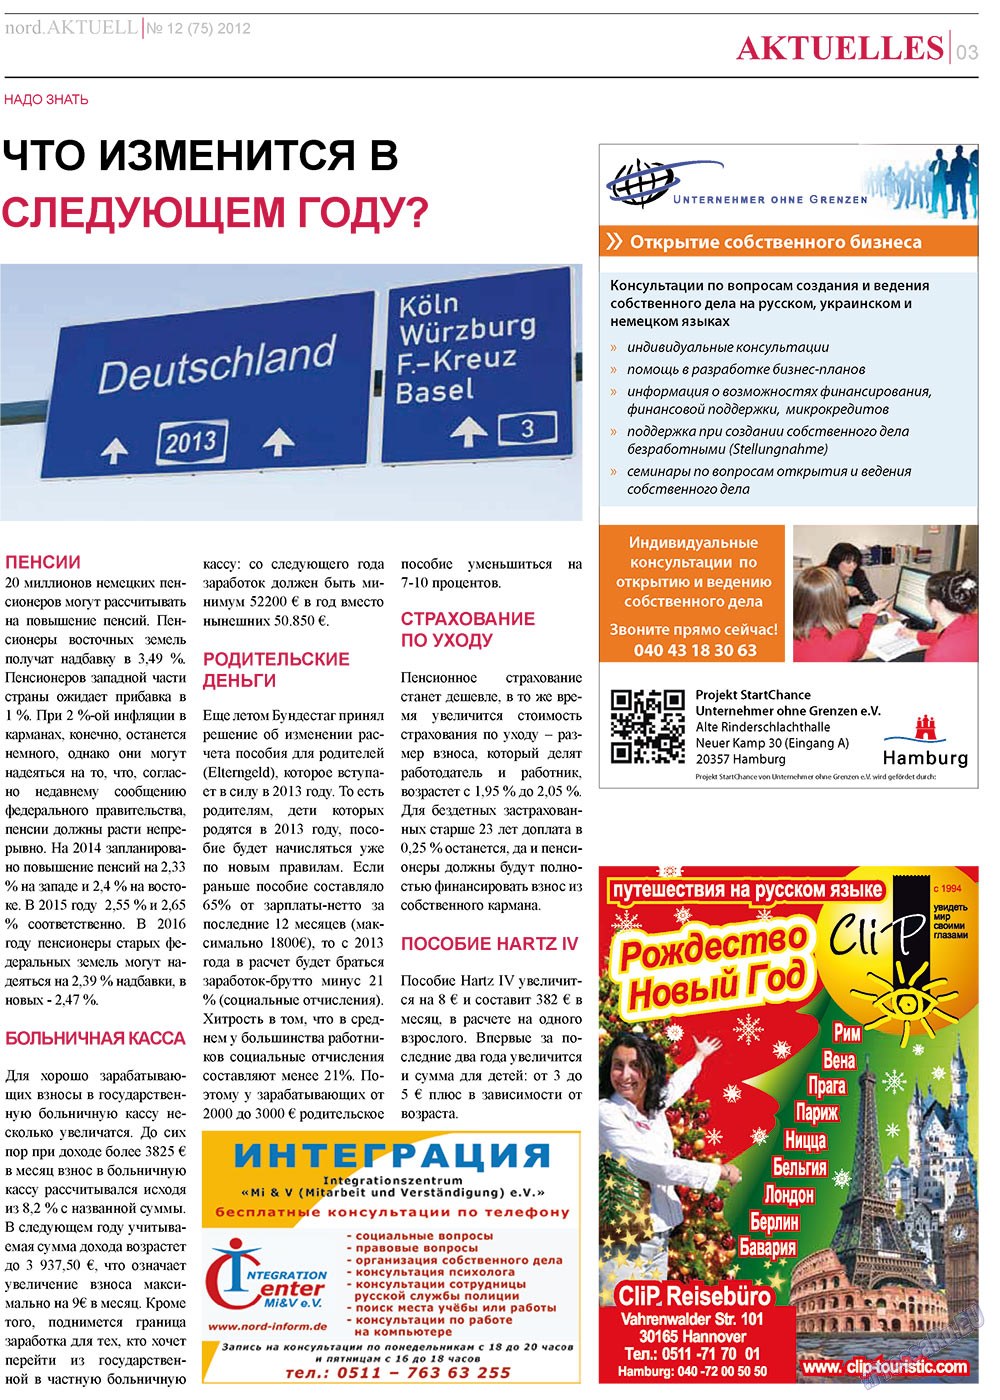 nord.Aktuell (газета). 2012 год, номер 12, стр. 3